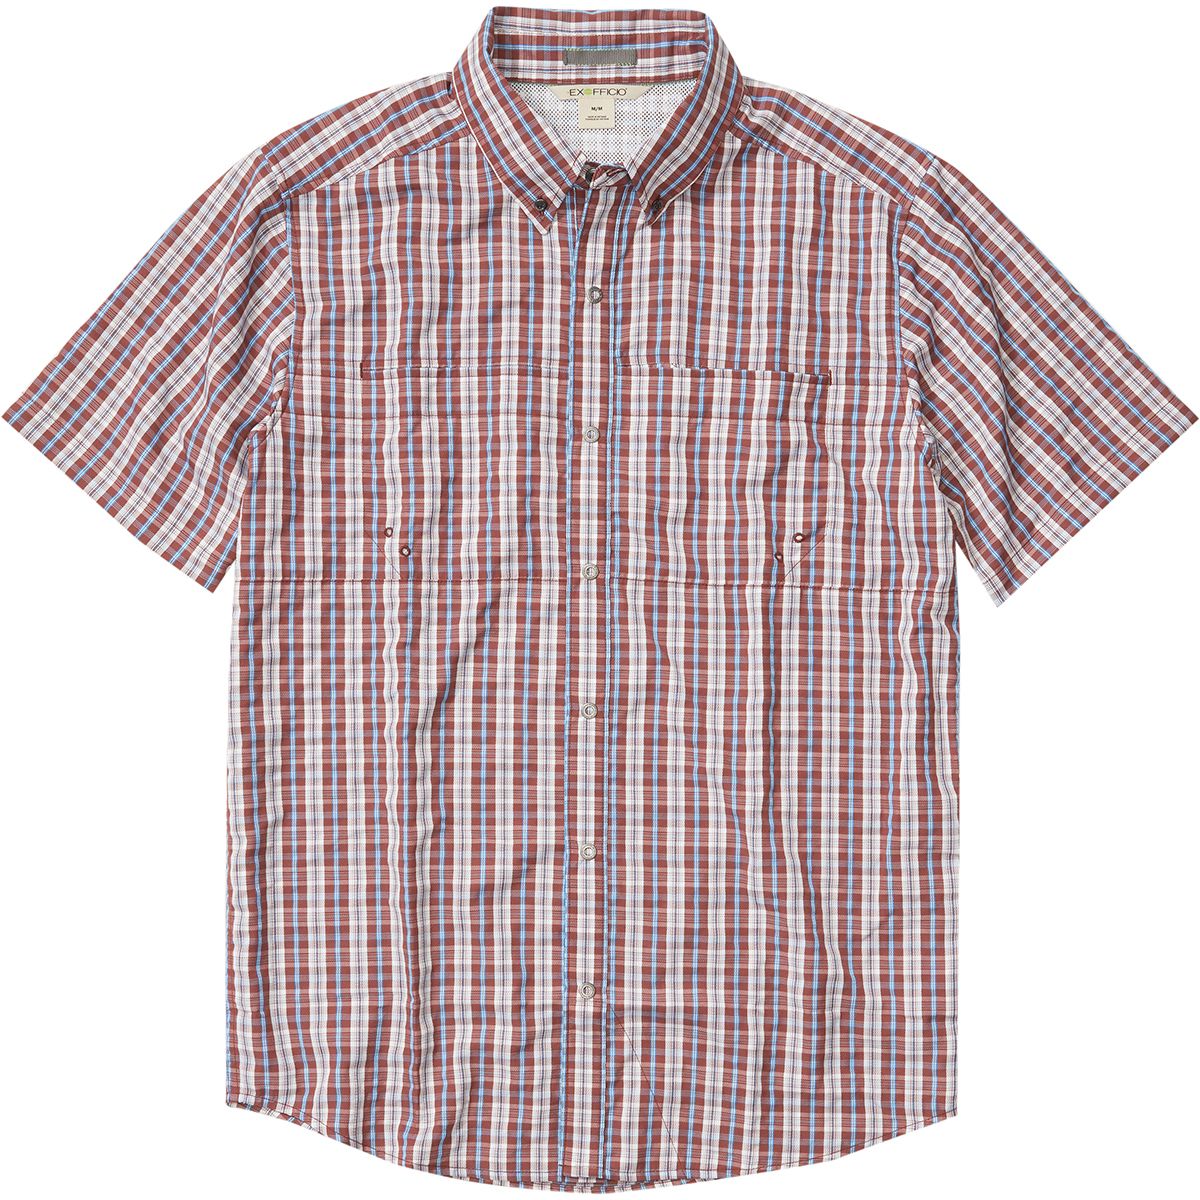 ExOfficio Sailfish Short-Sleeve Shirt - Men's